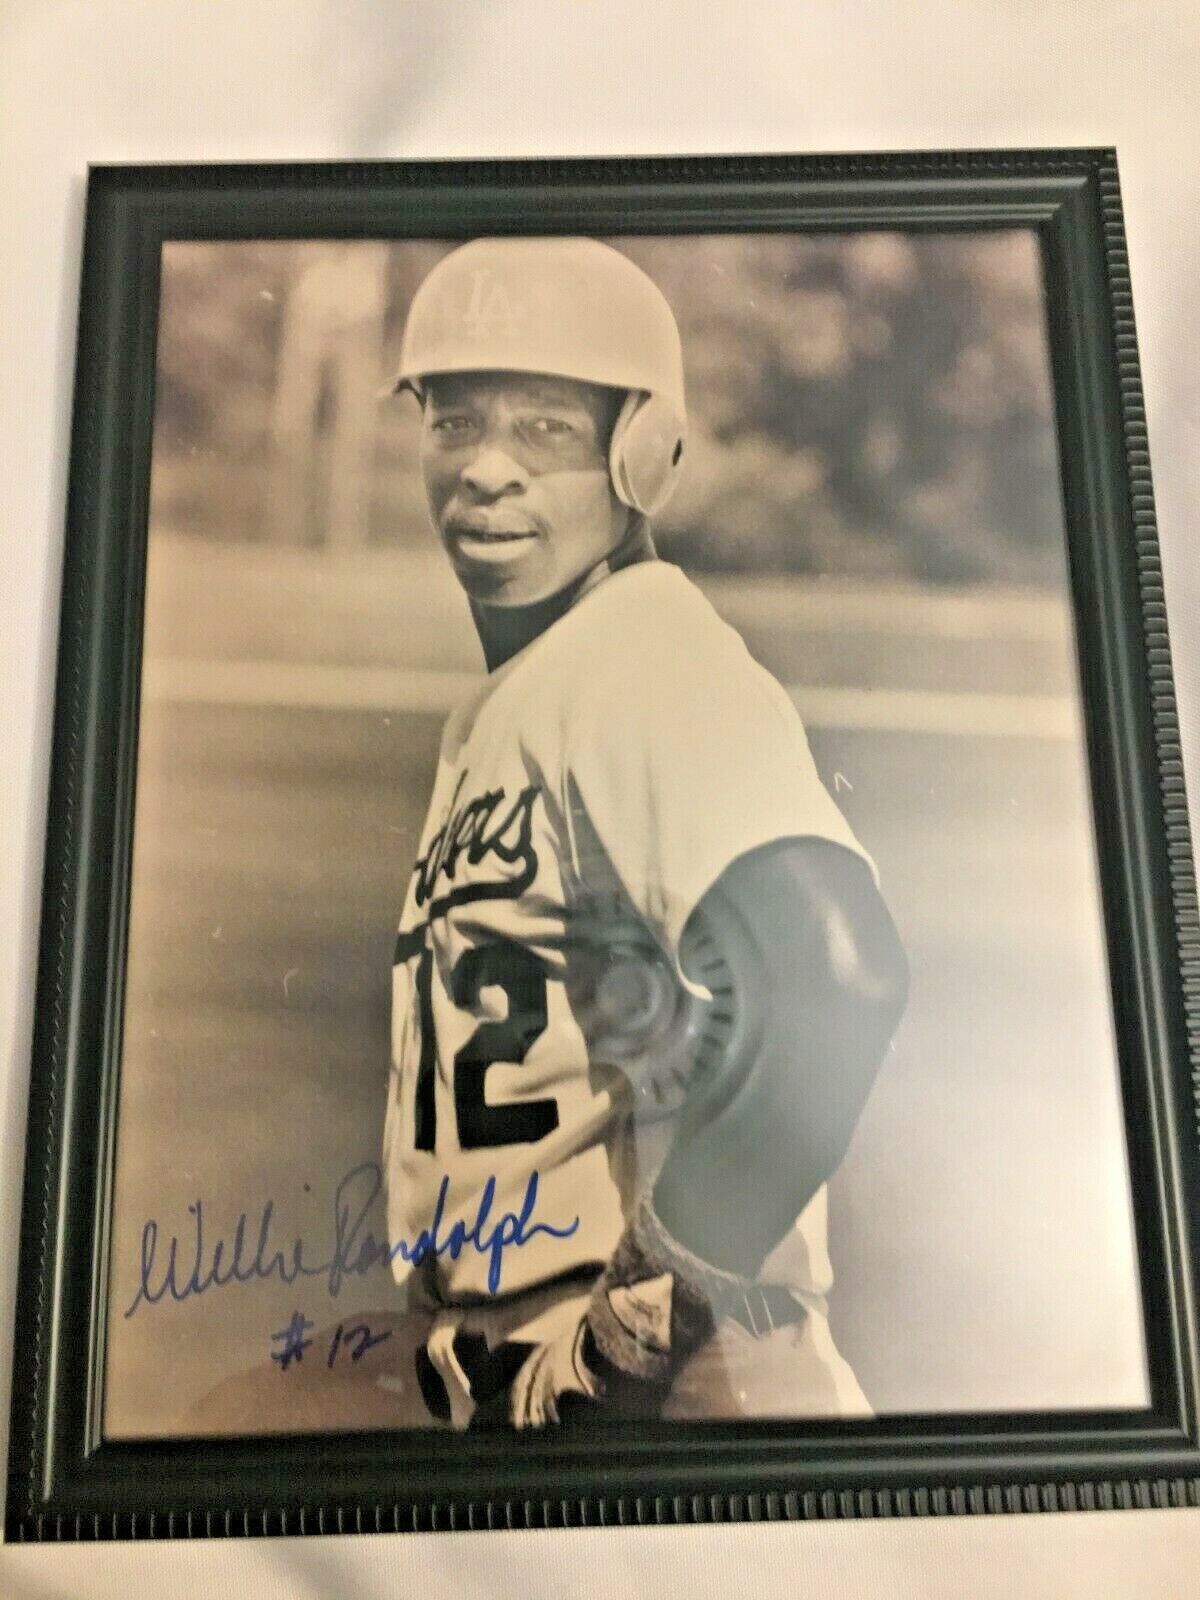 LA Dodgers Willie Randolph b/w signed framed 8x10 b/w photo***MAKE OFFERS*******